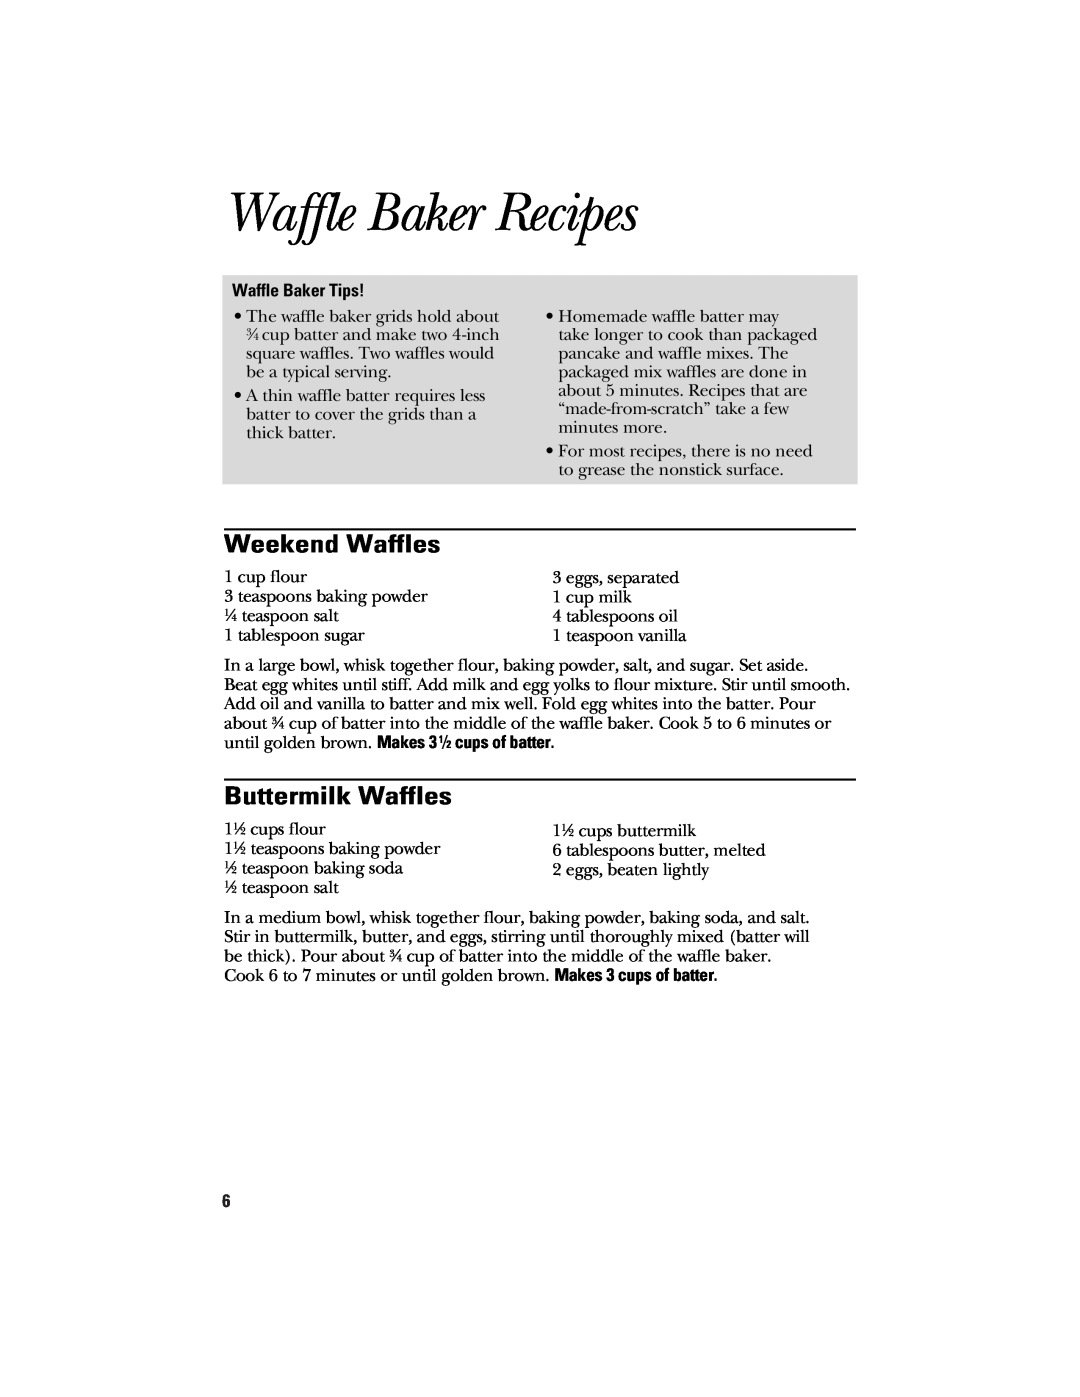 GE 106748 manual Waffle Baker Recipes, Weekend Waffles, Buttermilk Waffles 